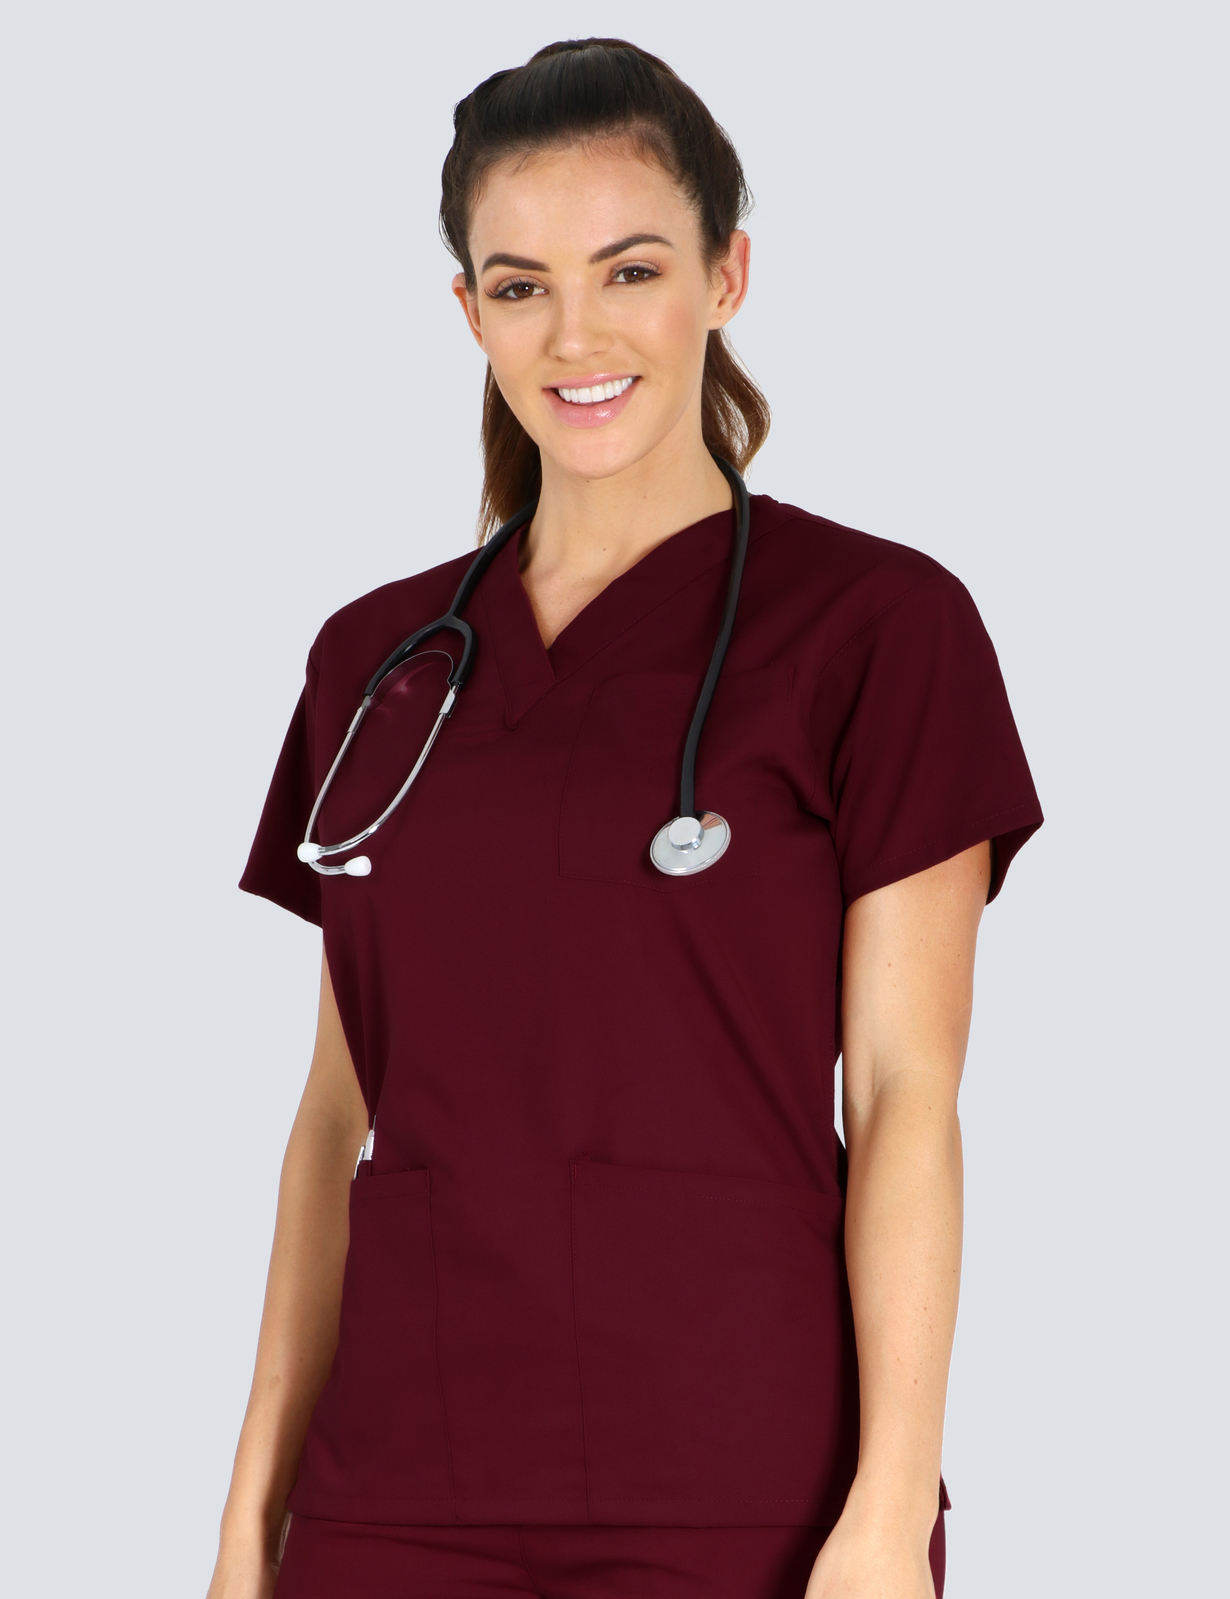 Queensland Children's Hospital Emergency Department Registrar Uniform Top Bundle  (4 Pocket Top in Burgundy  incl Logos)